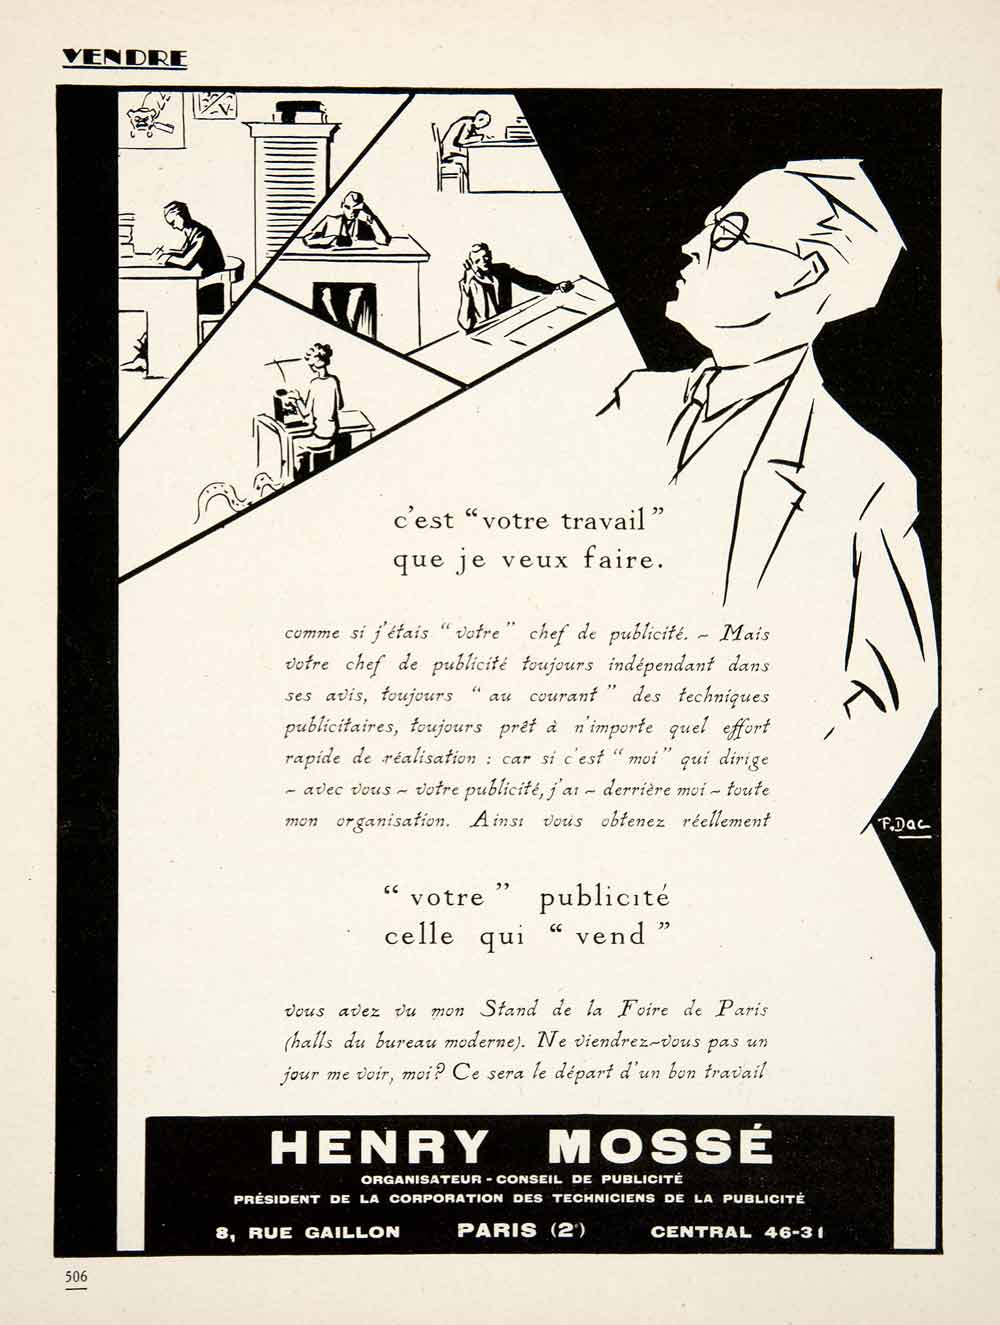 1926 Ad Henry Mosse 8 Rue Gaillon Paris Advertising Agency Dac Publicity VEN4